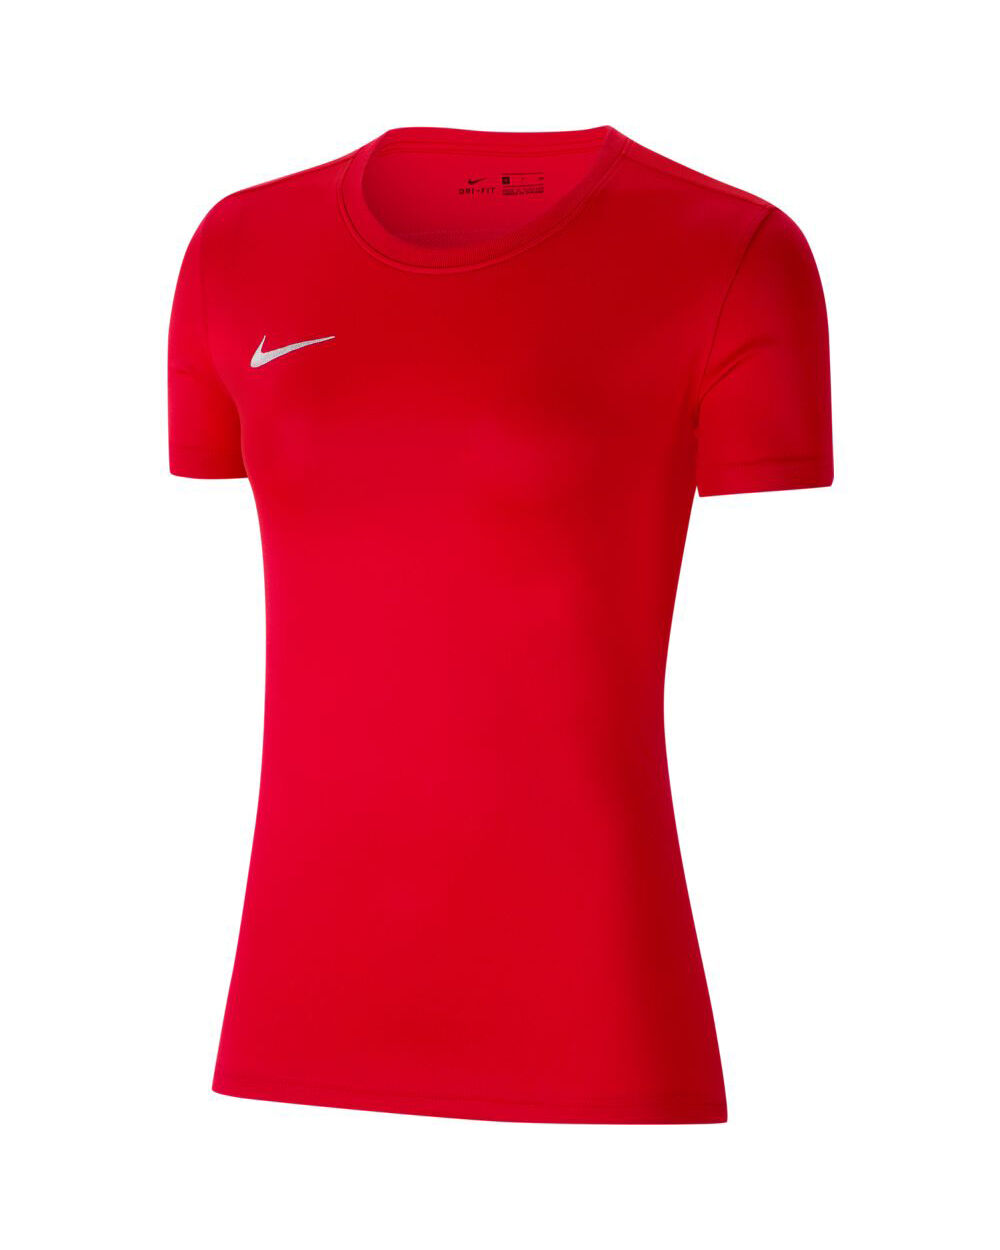 Camiseta Nike Park VII Rojo para Mujeres - BV6728-657